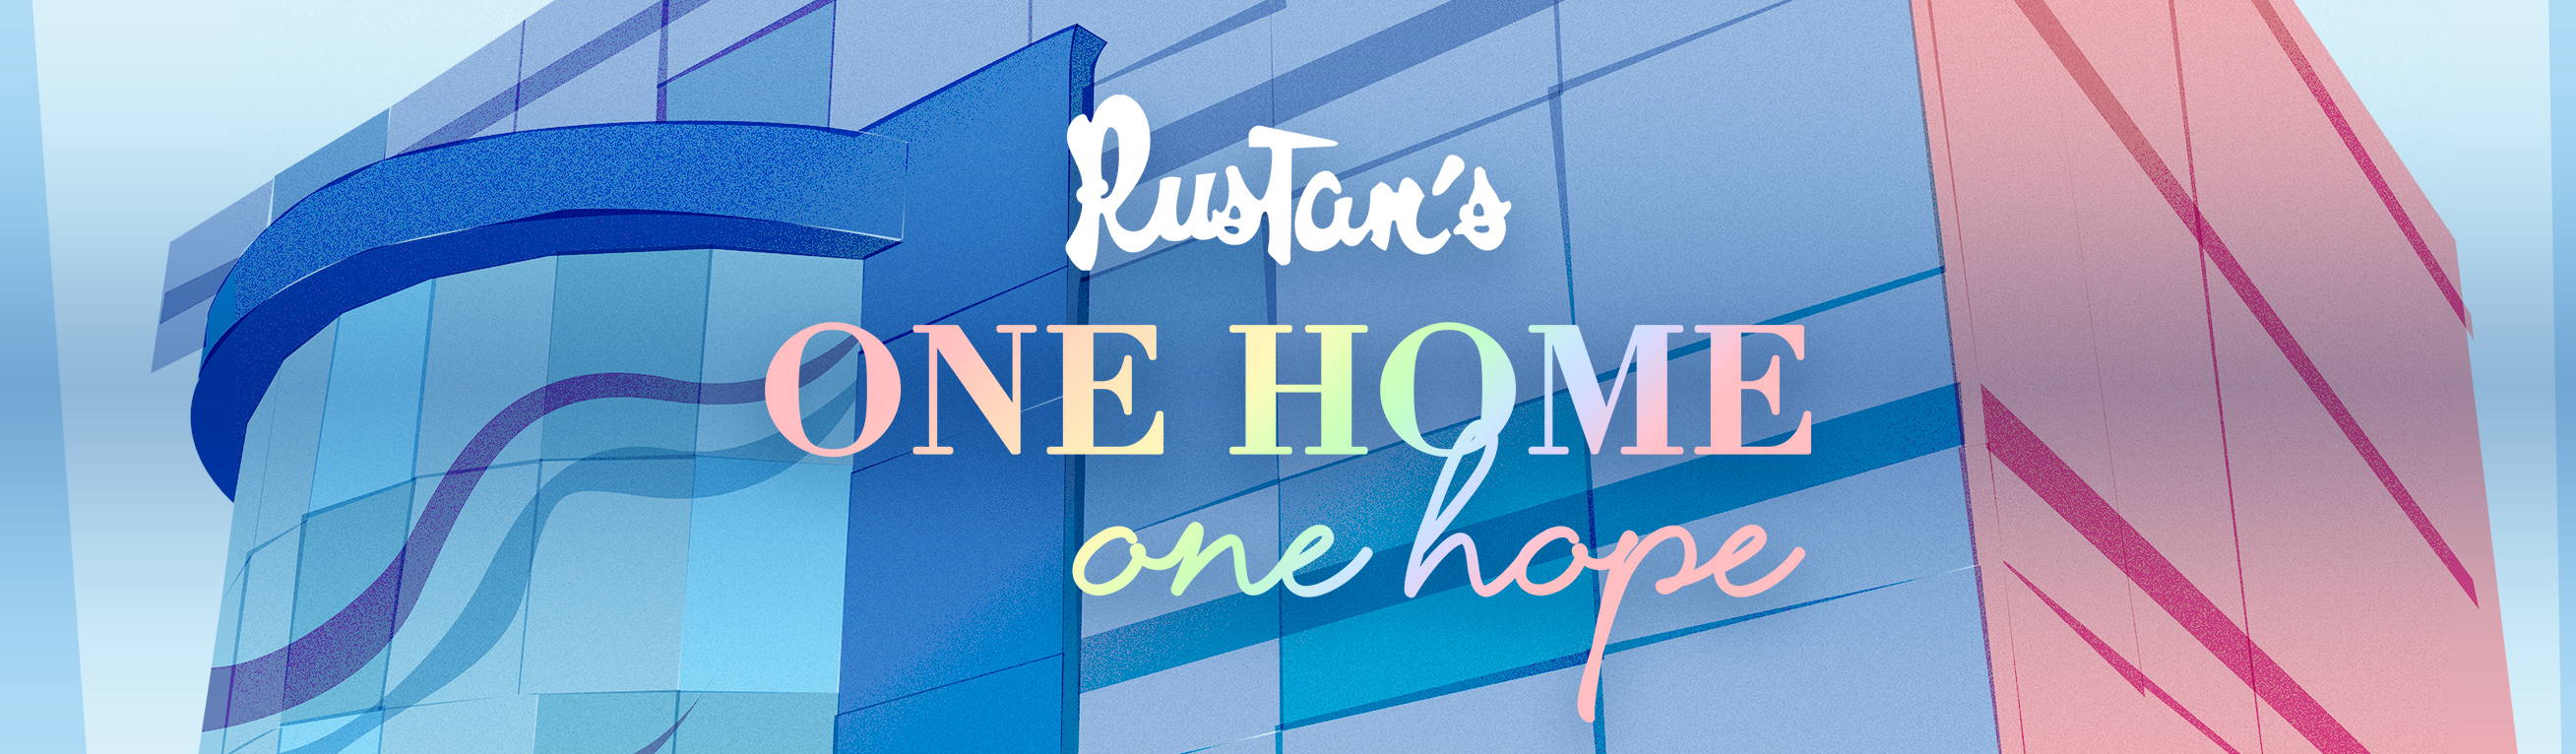 Rustan's Welcomes You Home